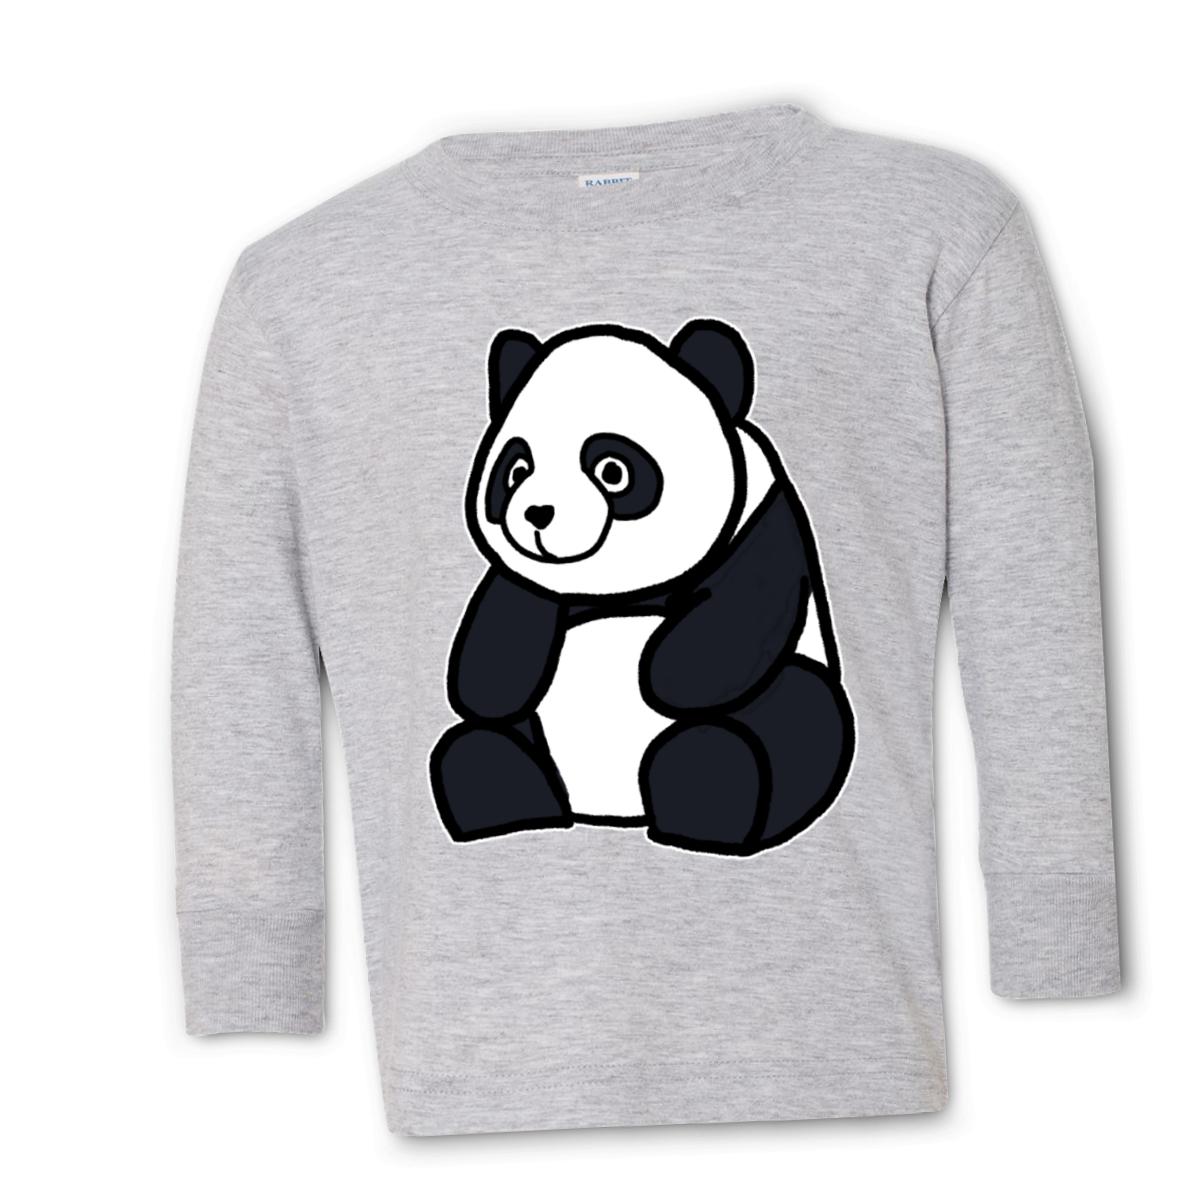 Panda Toddler Long Sleeve Tee 2T heather